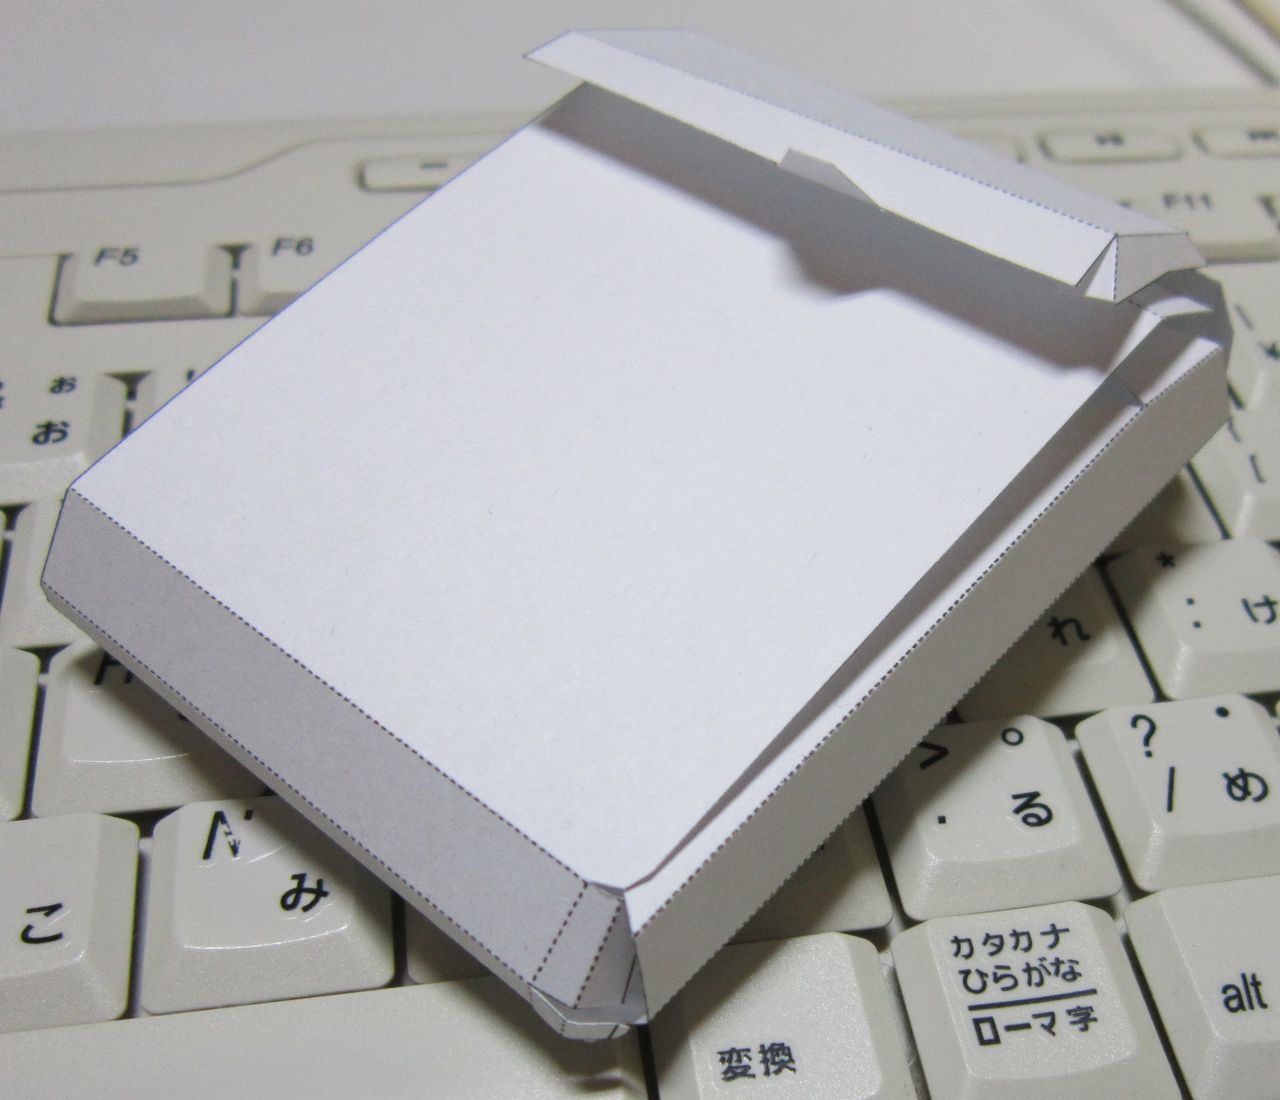 mieki256's diary - PC-6001のペーパークラフトを自作してみた